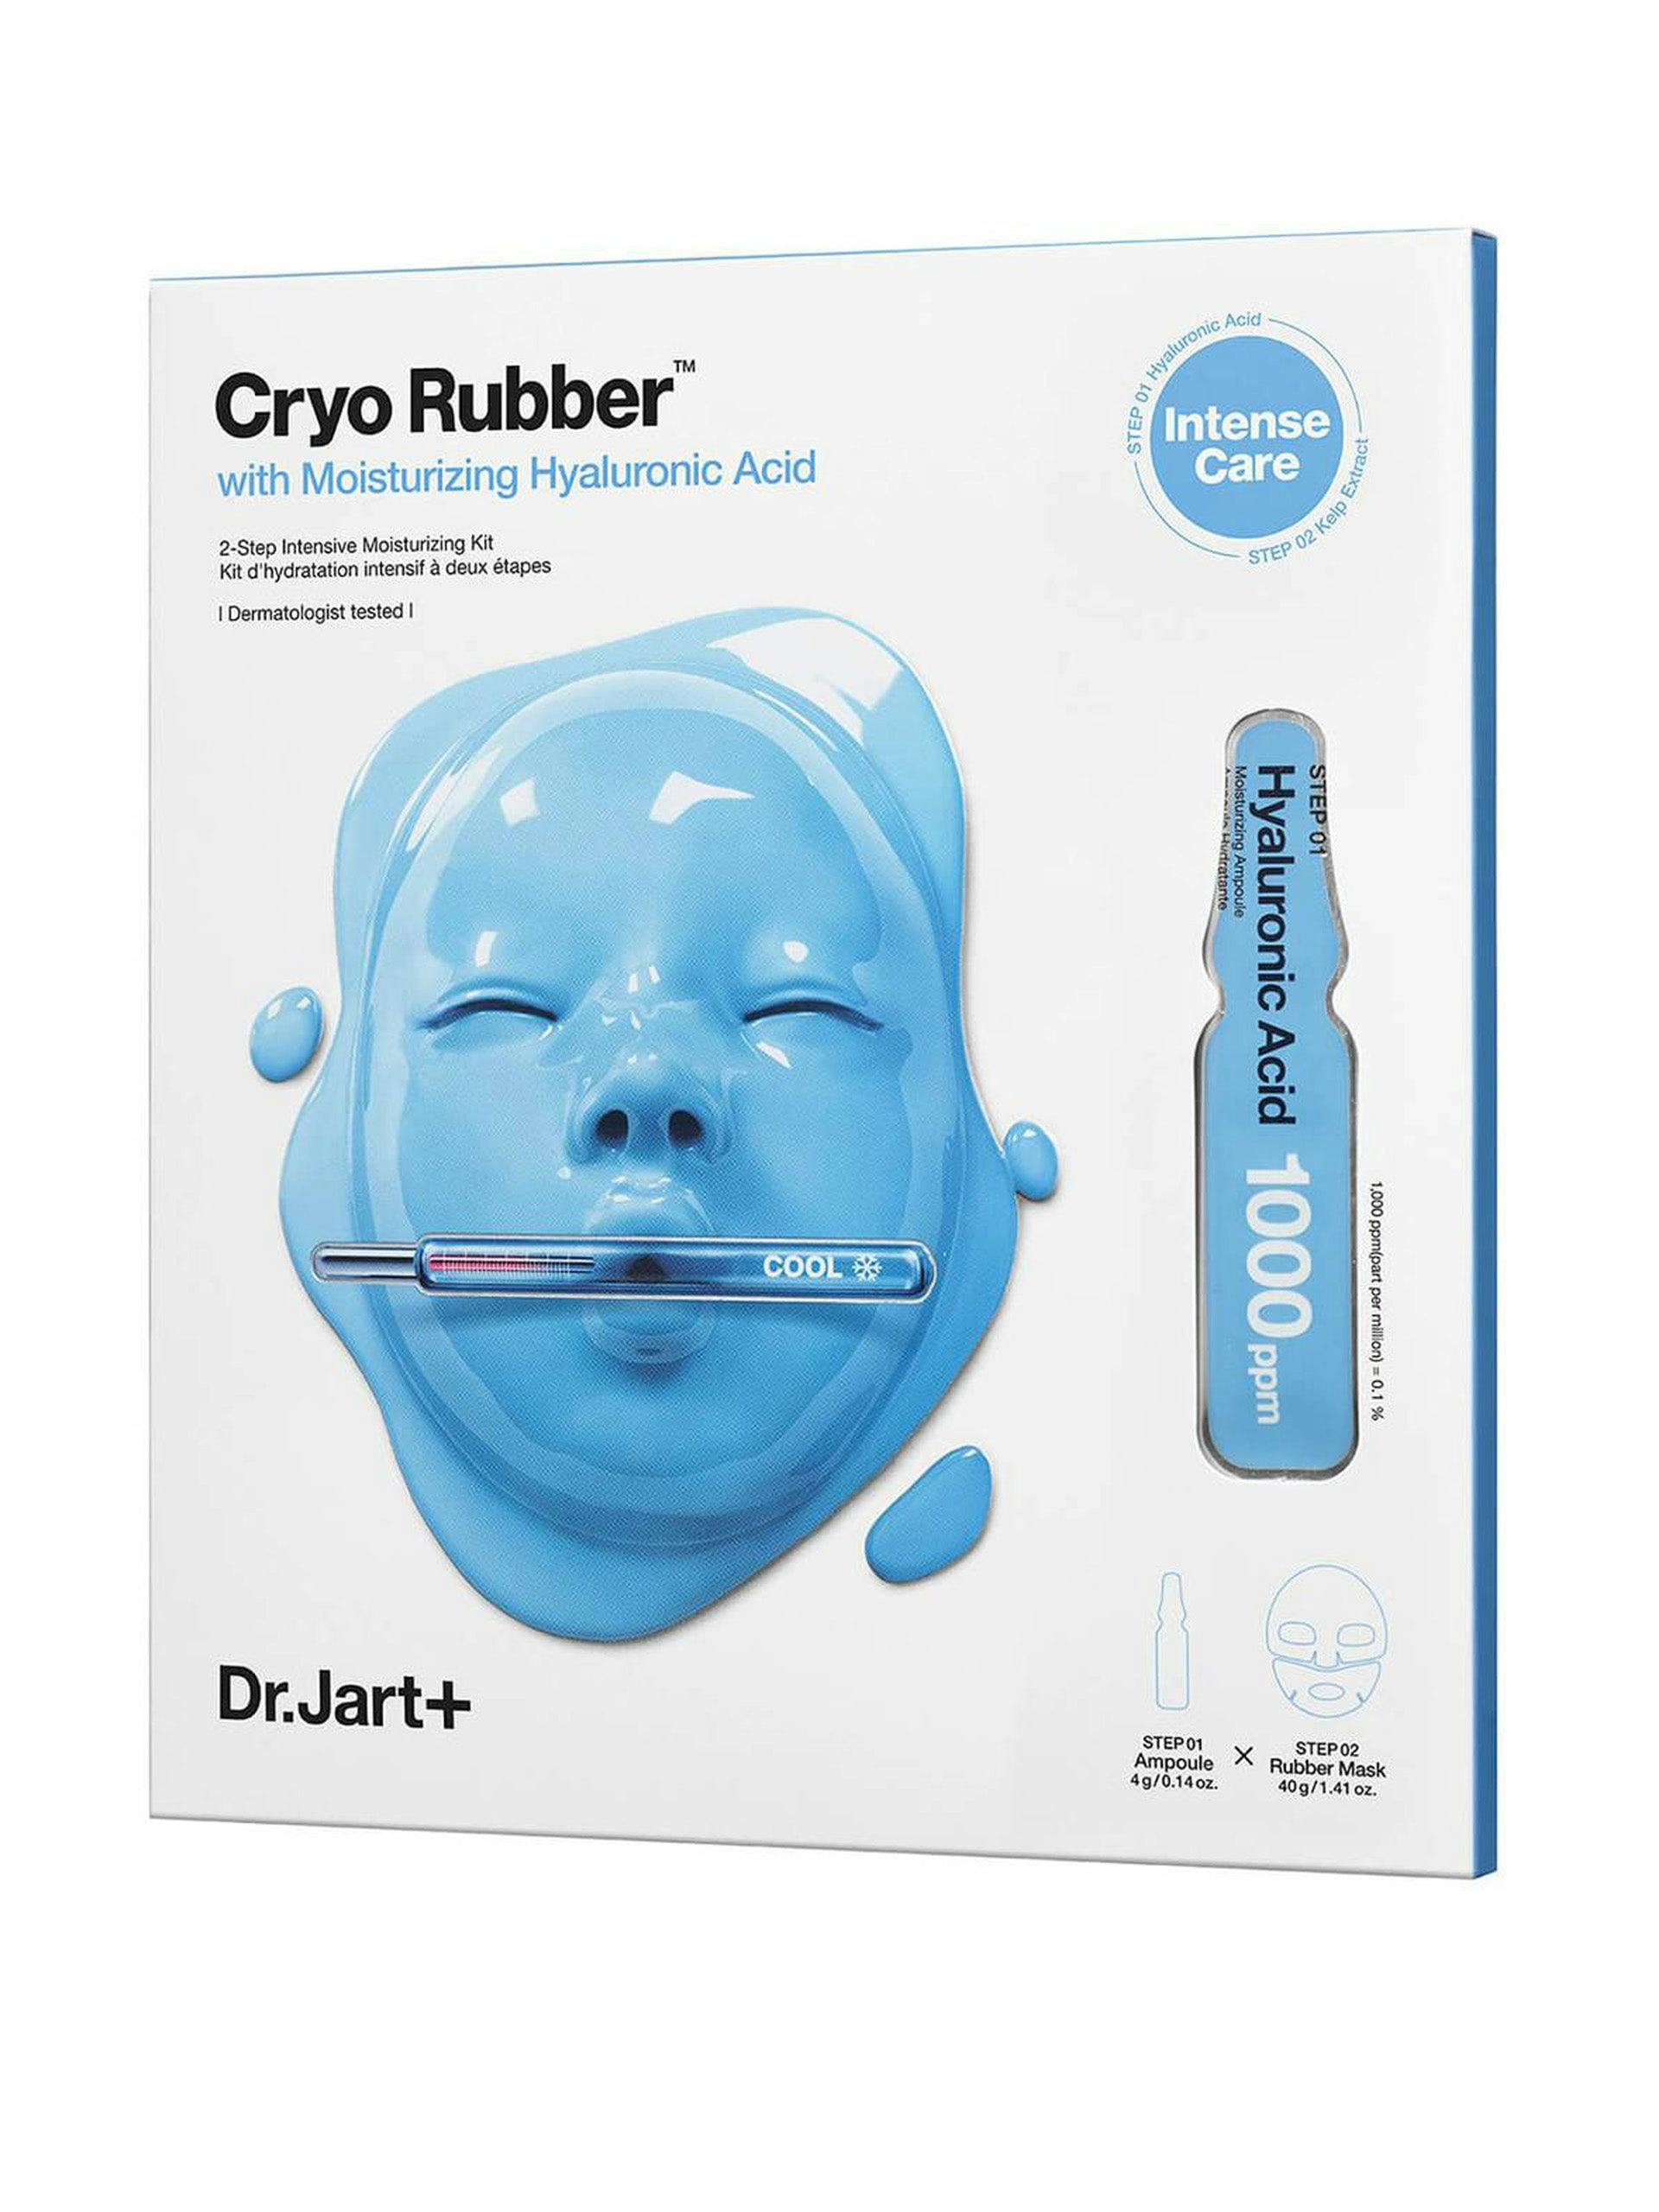 Cryo rubber with moisturizing hyaluronic acid